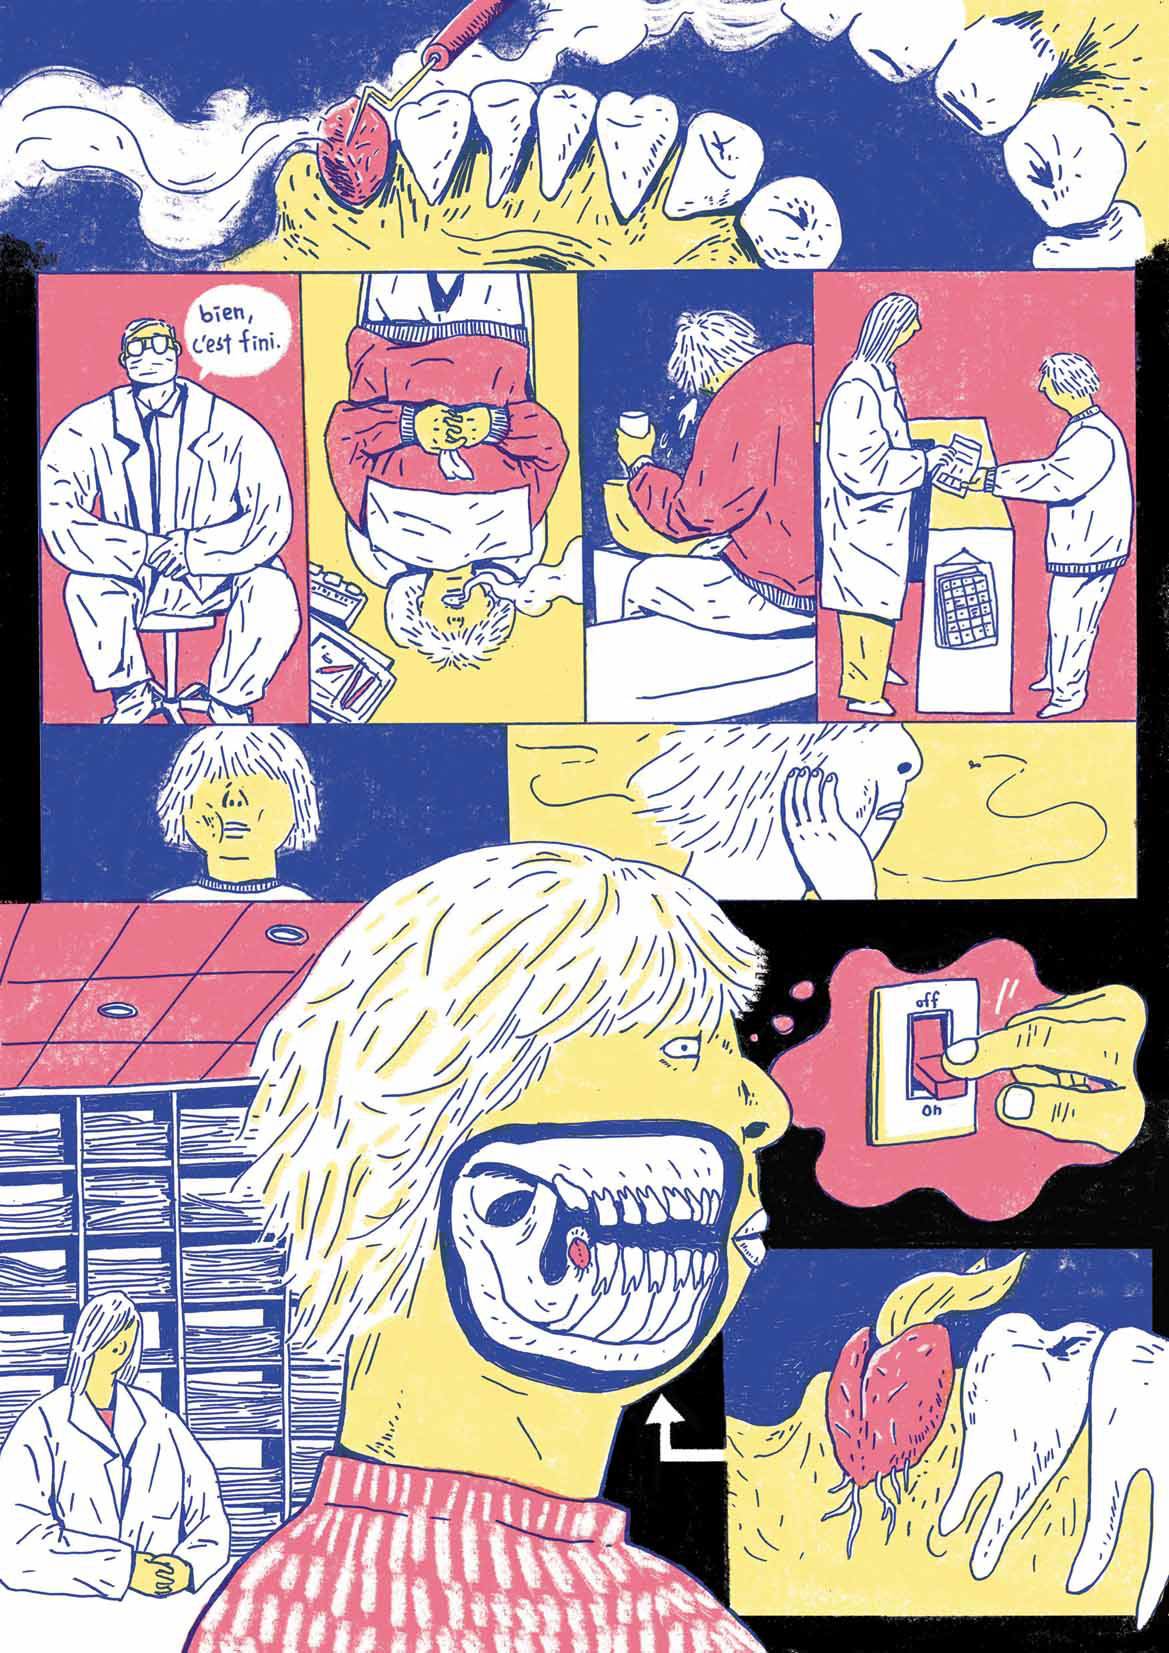 teeth dentist phobia imagination Angouleme comic fear afraid Experience life